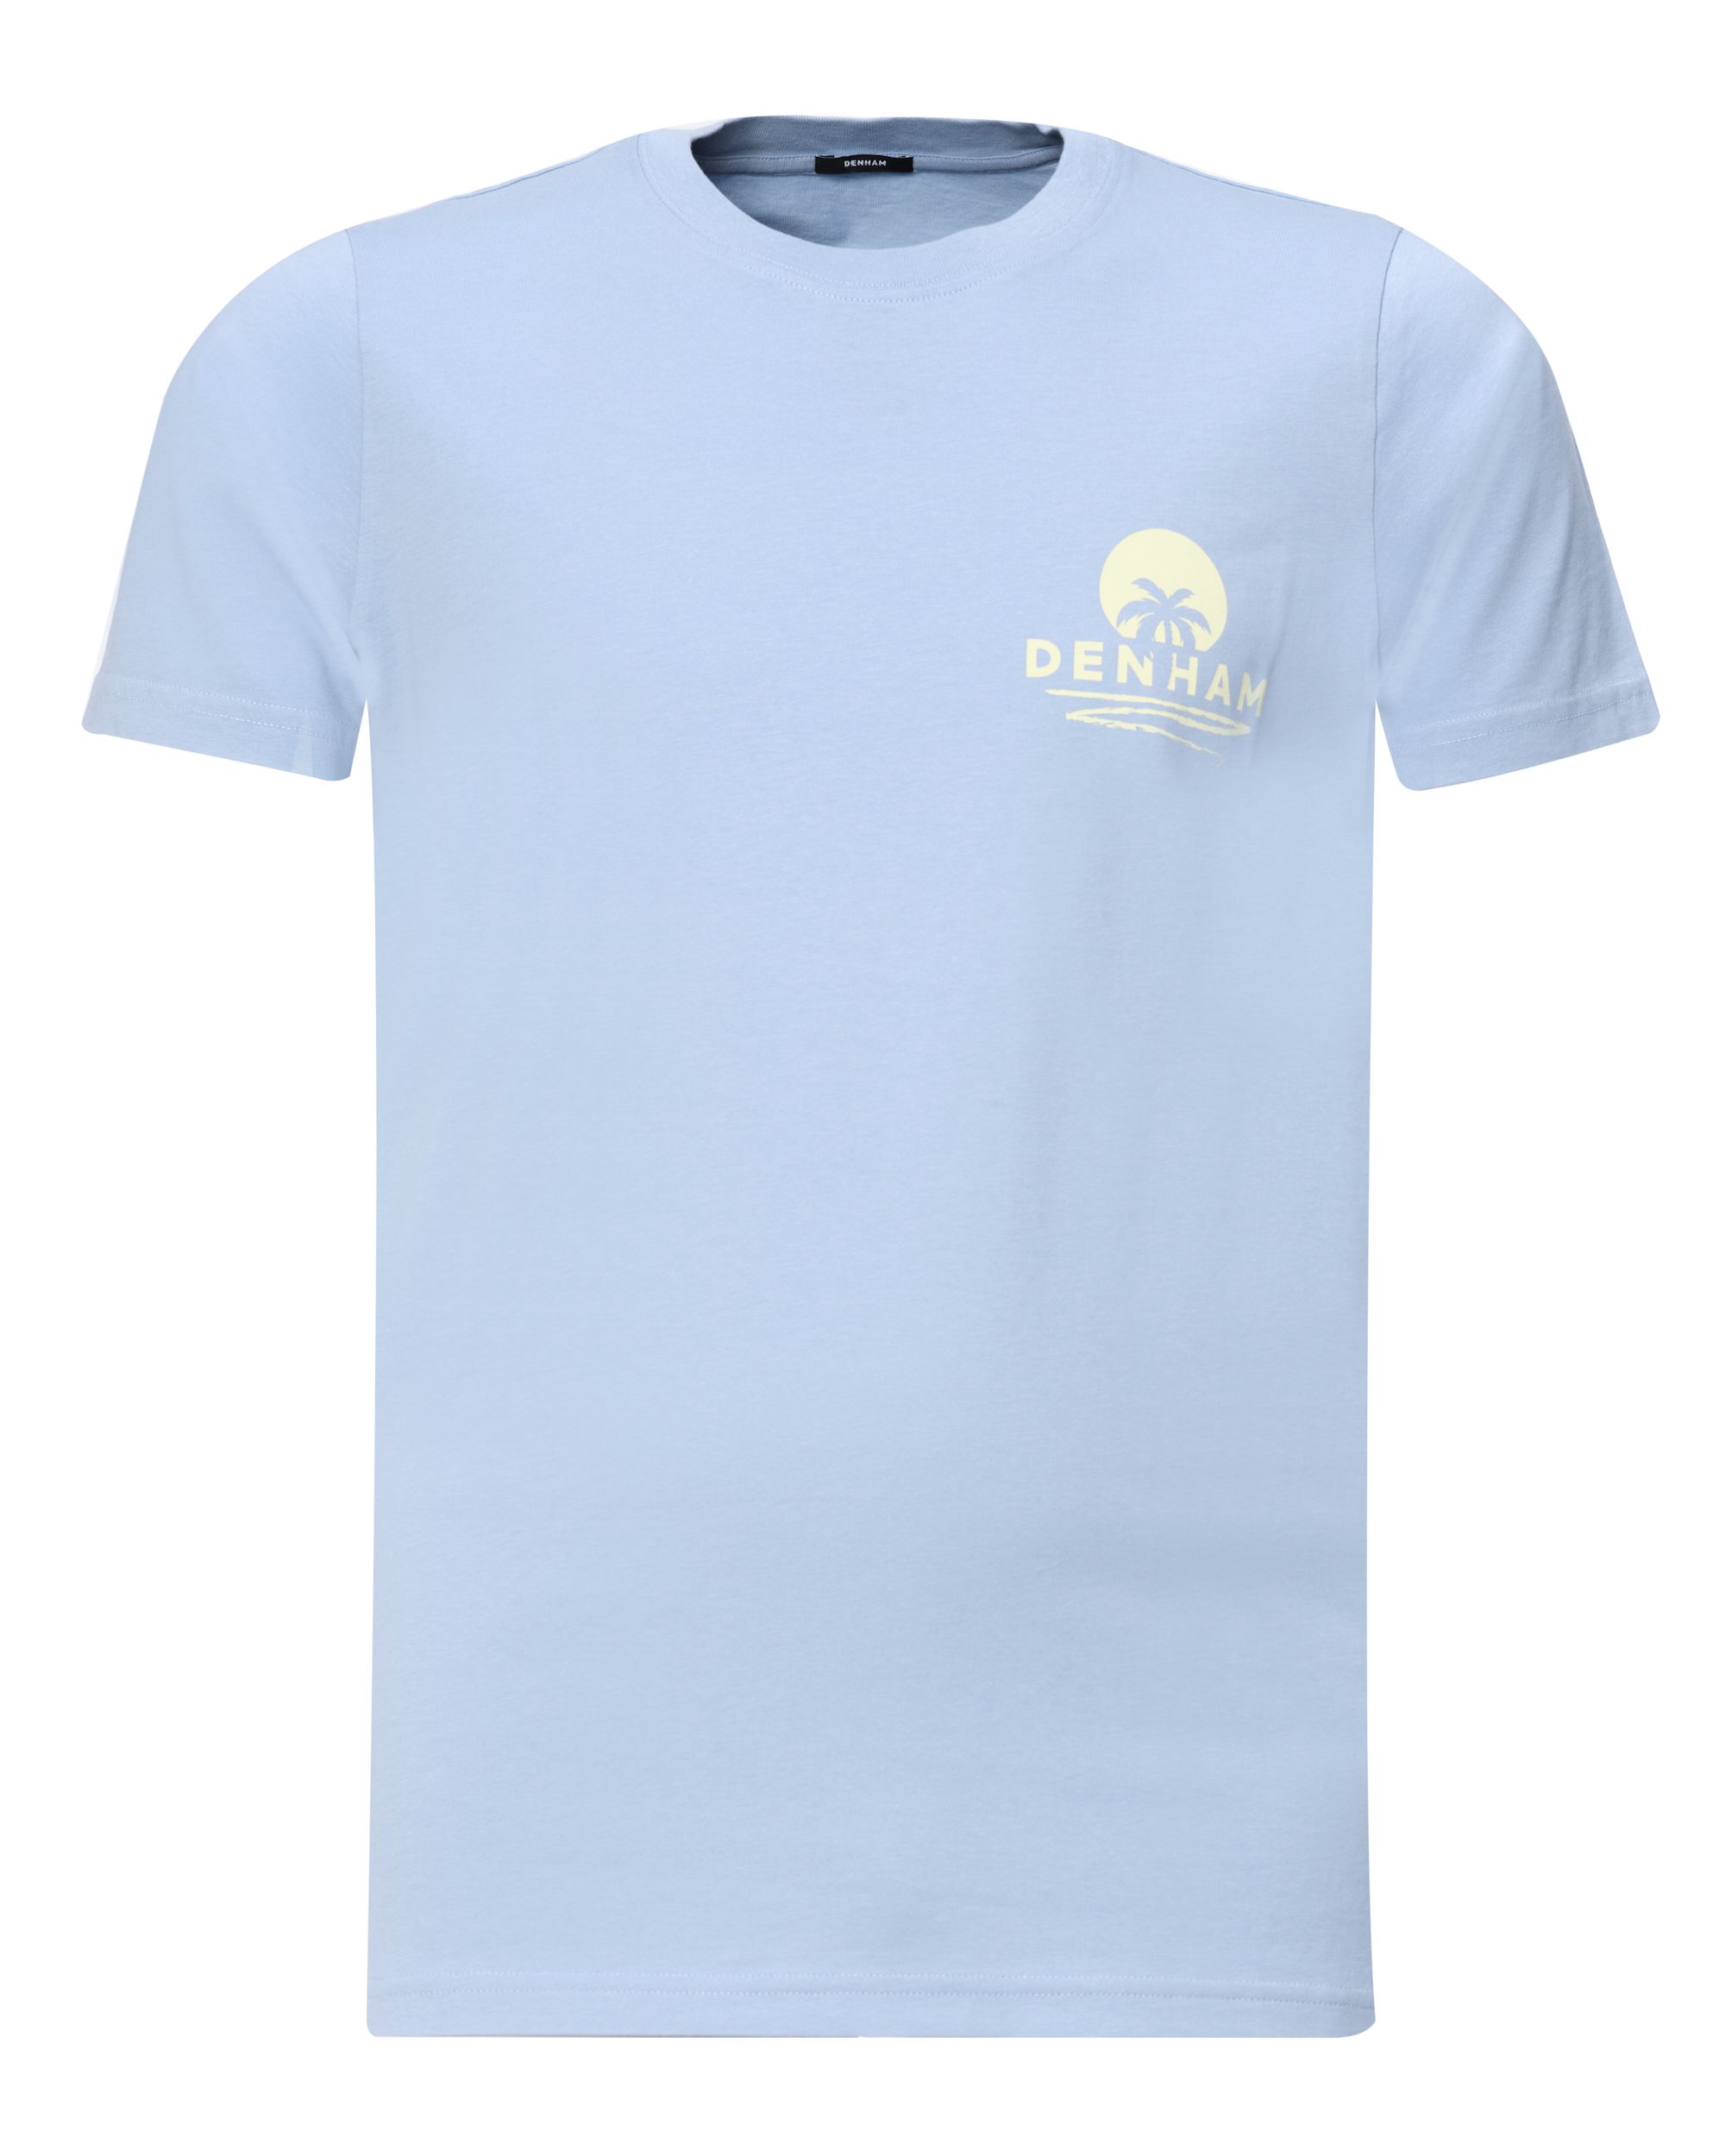 DENHAM Nissi T-shirt KM Blauw 080098-001-L